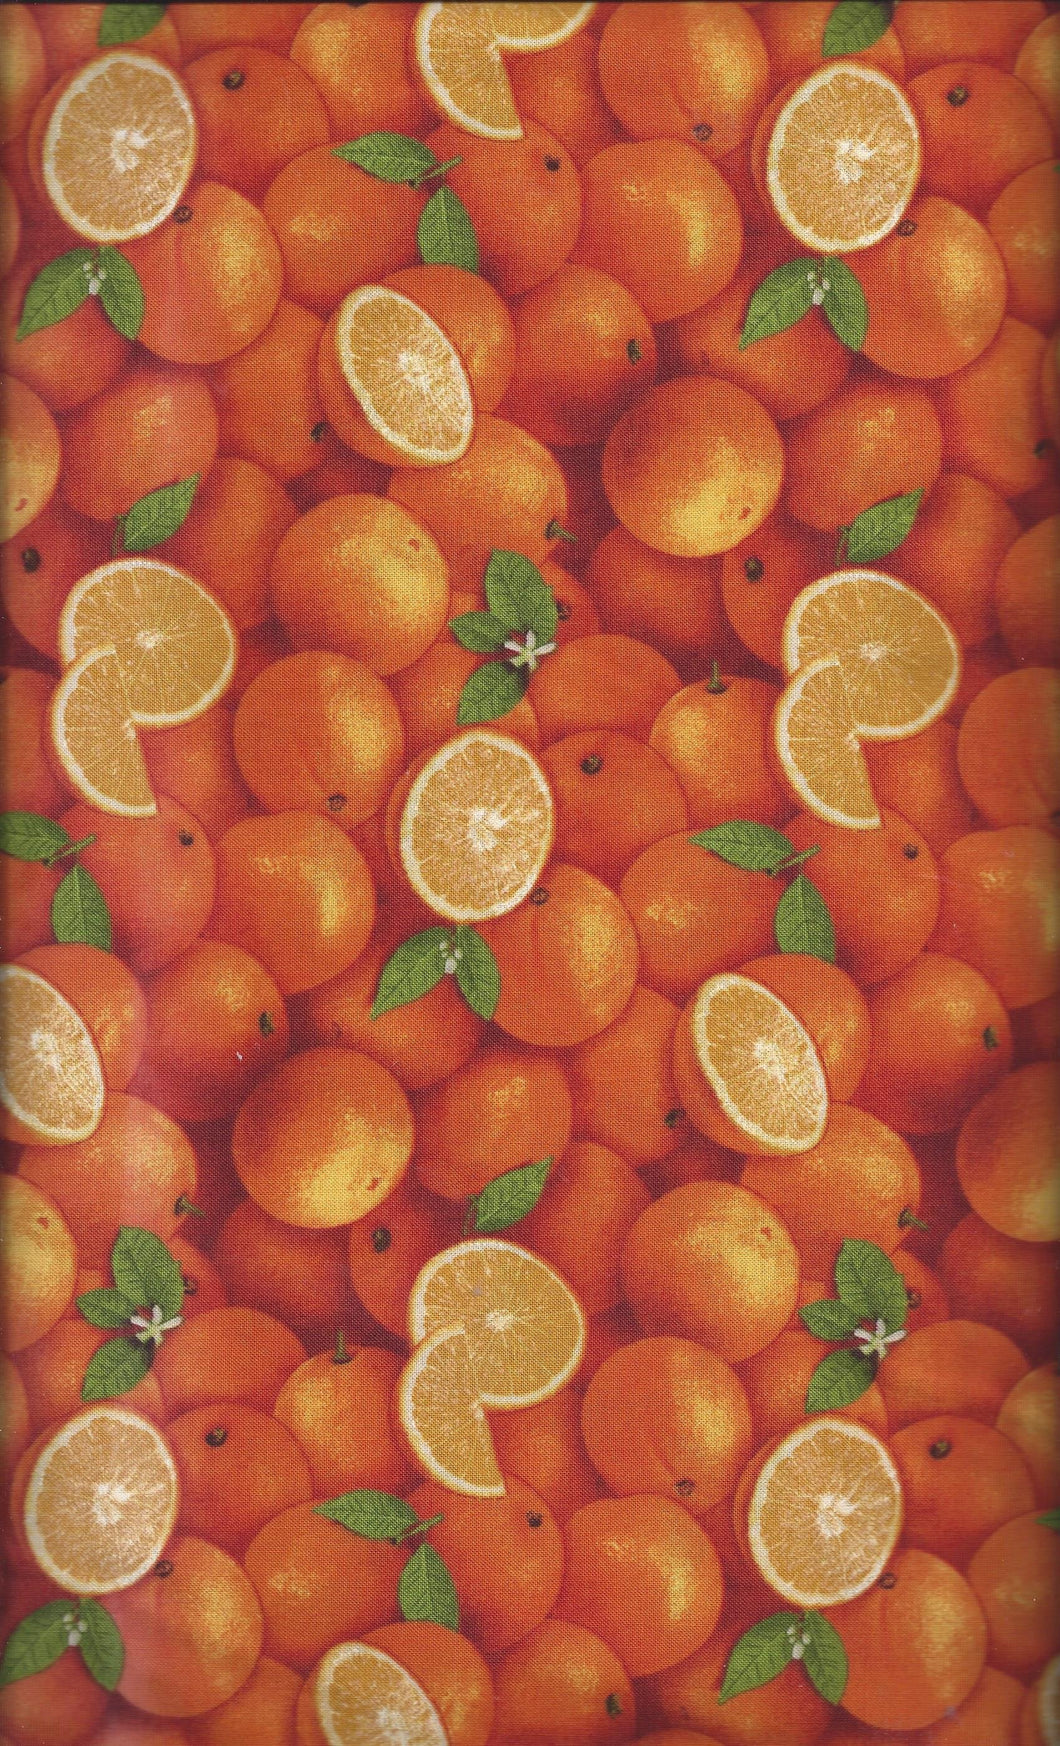 Food Festival Oranges ed504